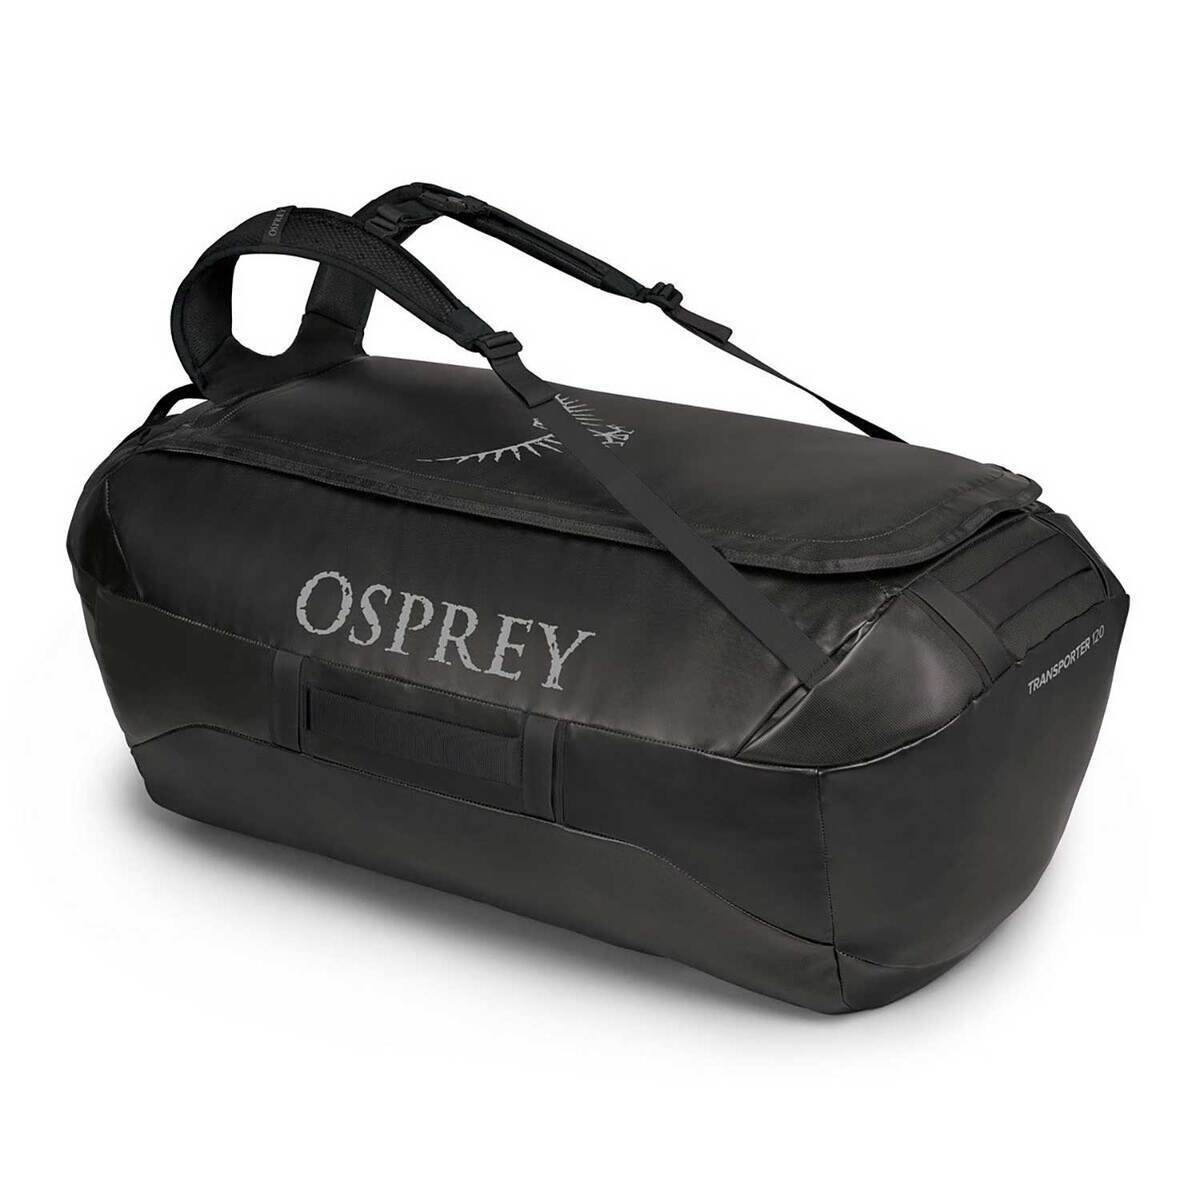 Osprey Transporter 120 Expedition Duffel Bag | Sportsman's Warehouse